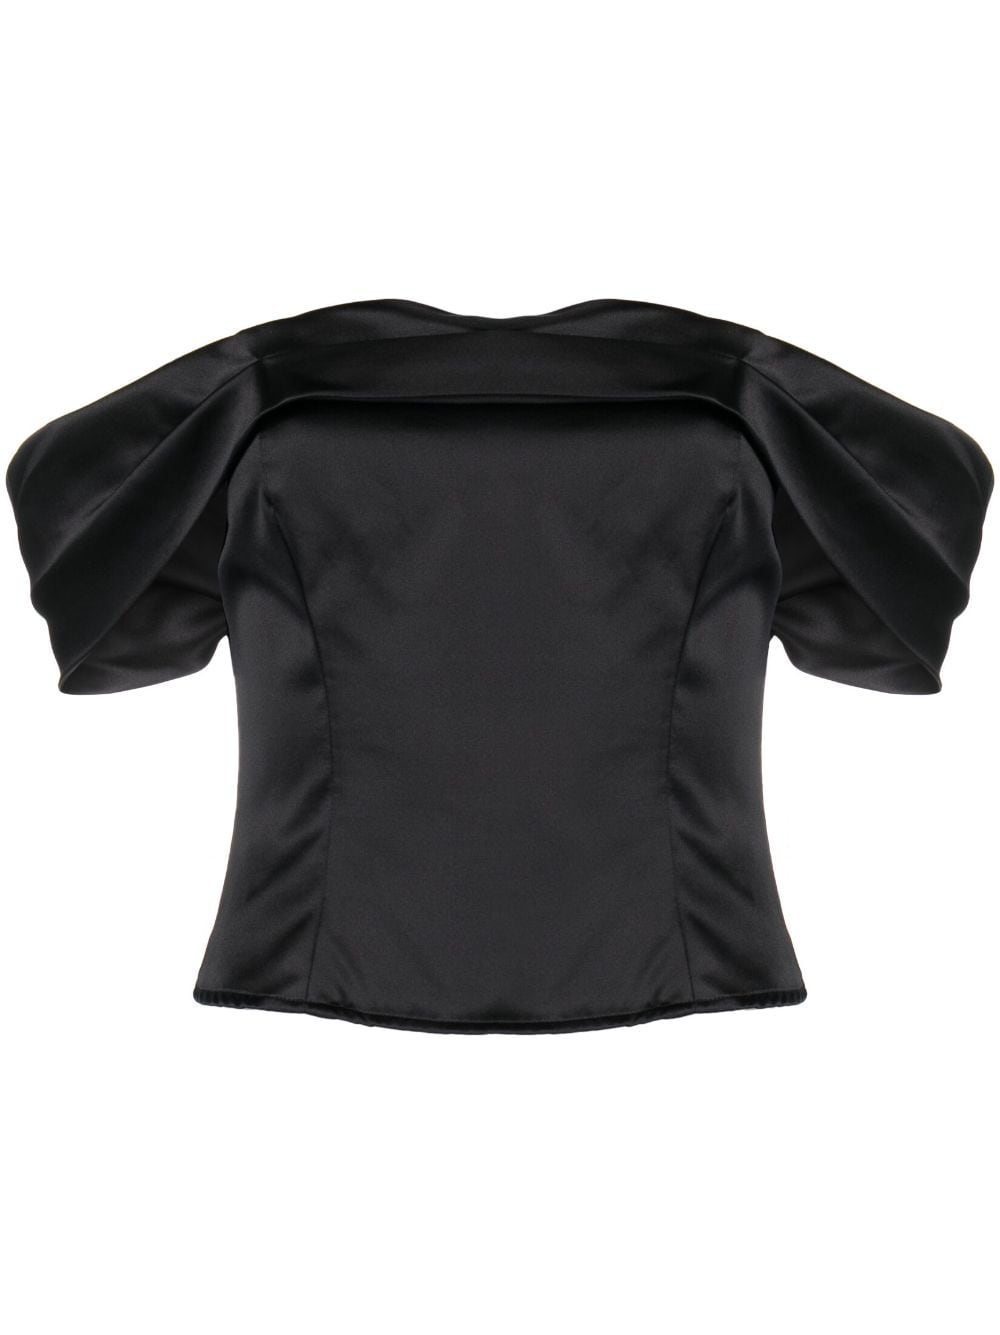 Reformation Lux off-shoulder corset top - Black